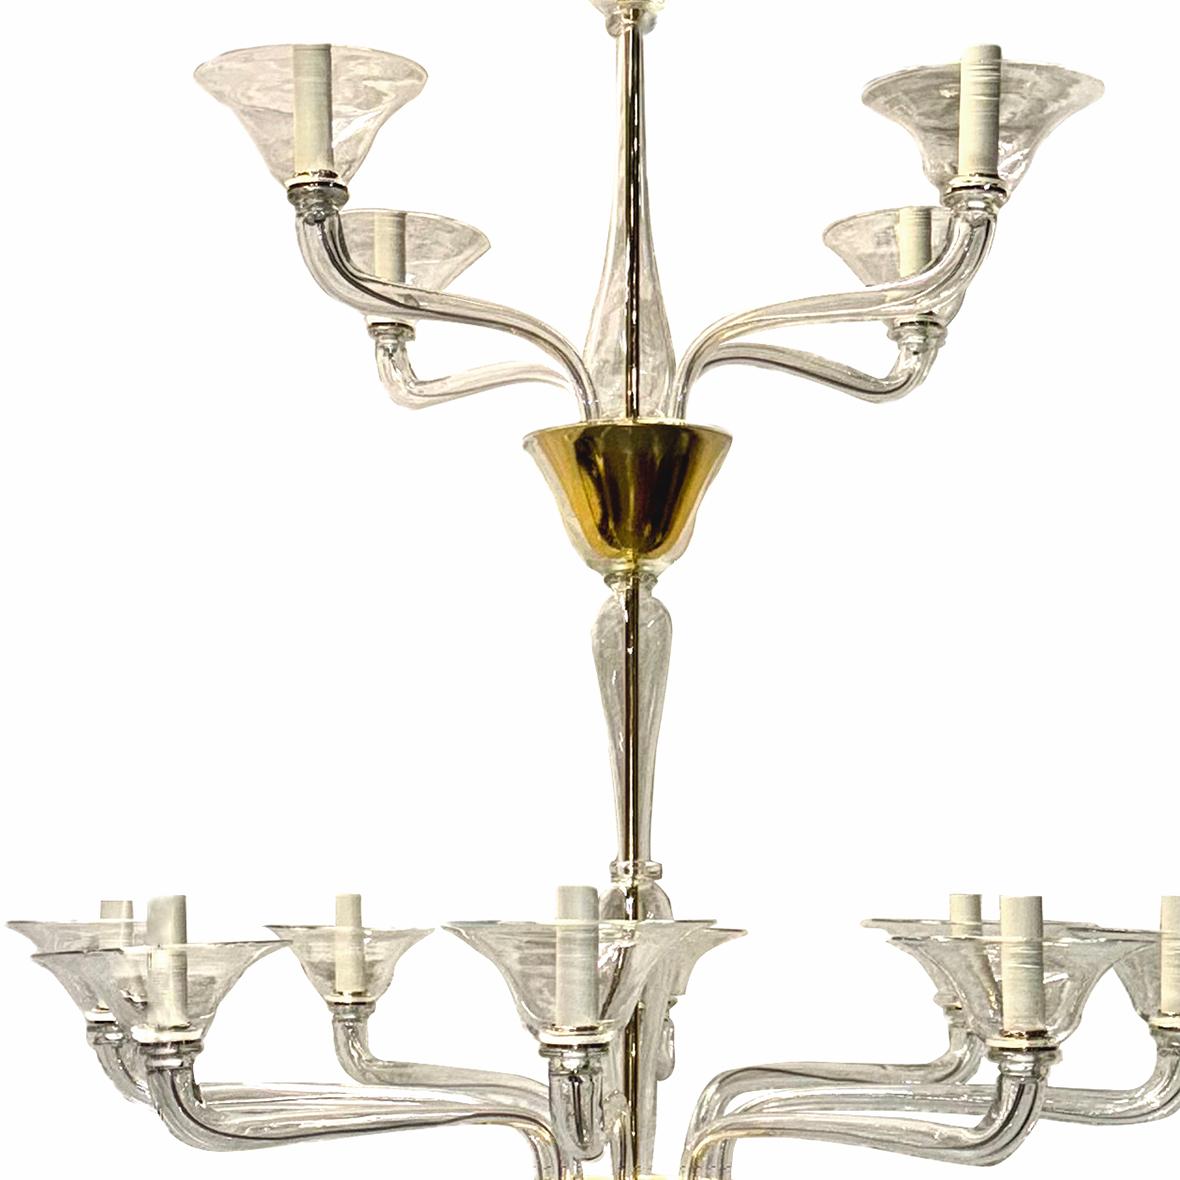 A circa 1950’s large Italian clear Murano glass double-tier twelve-arm chandelier.

Measurements:
Height: 56″
Diameter: 41″